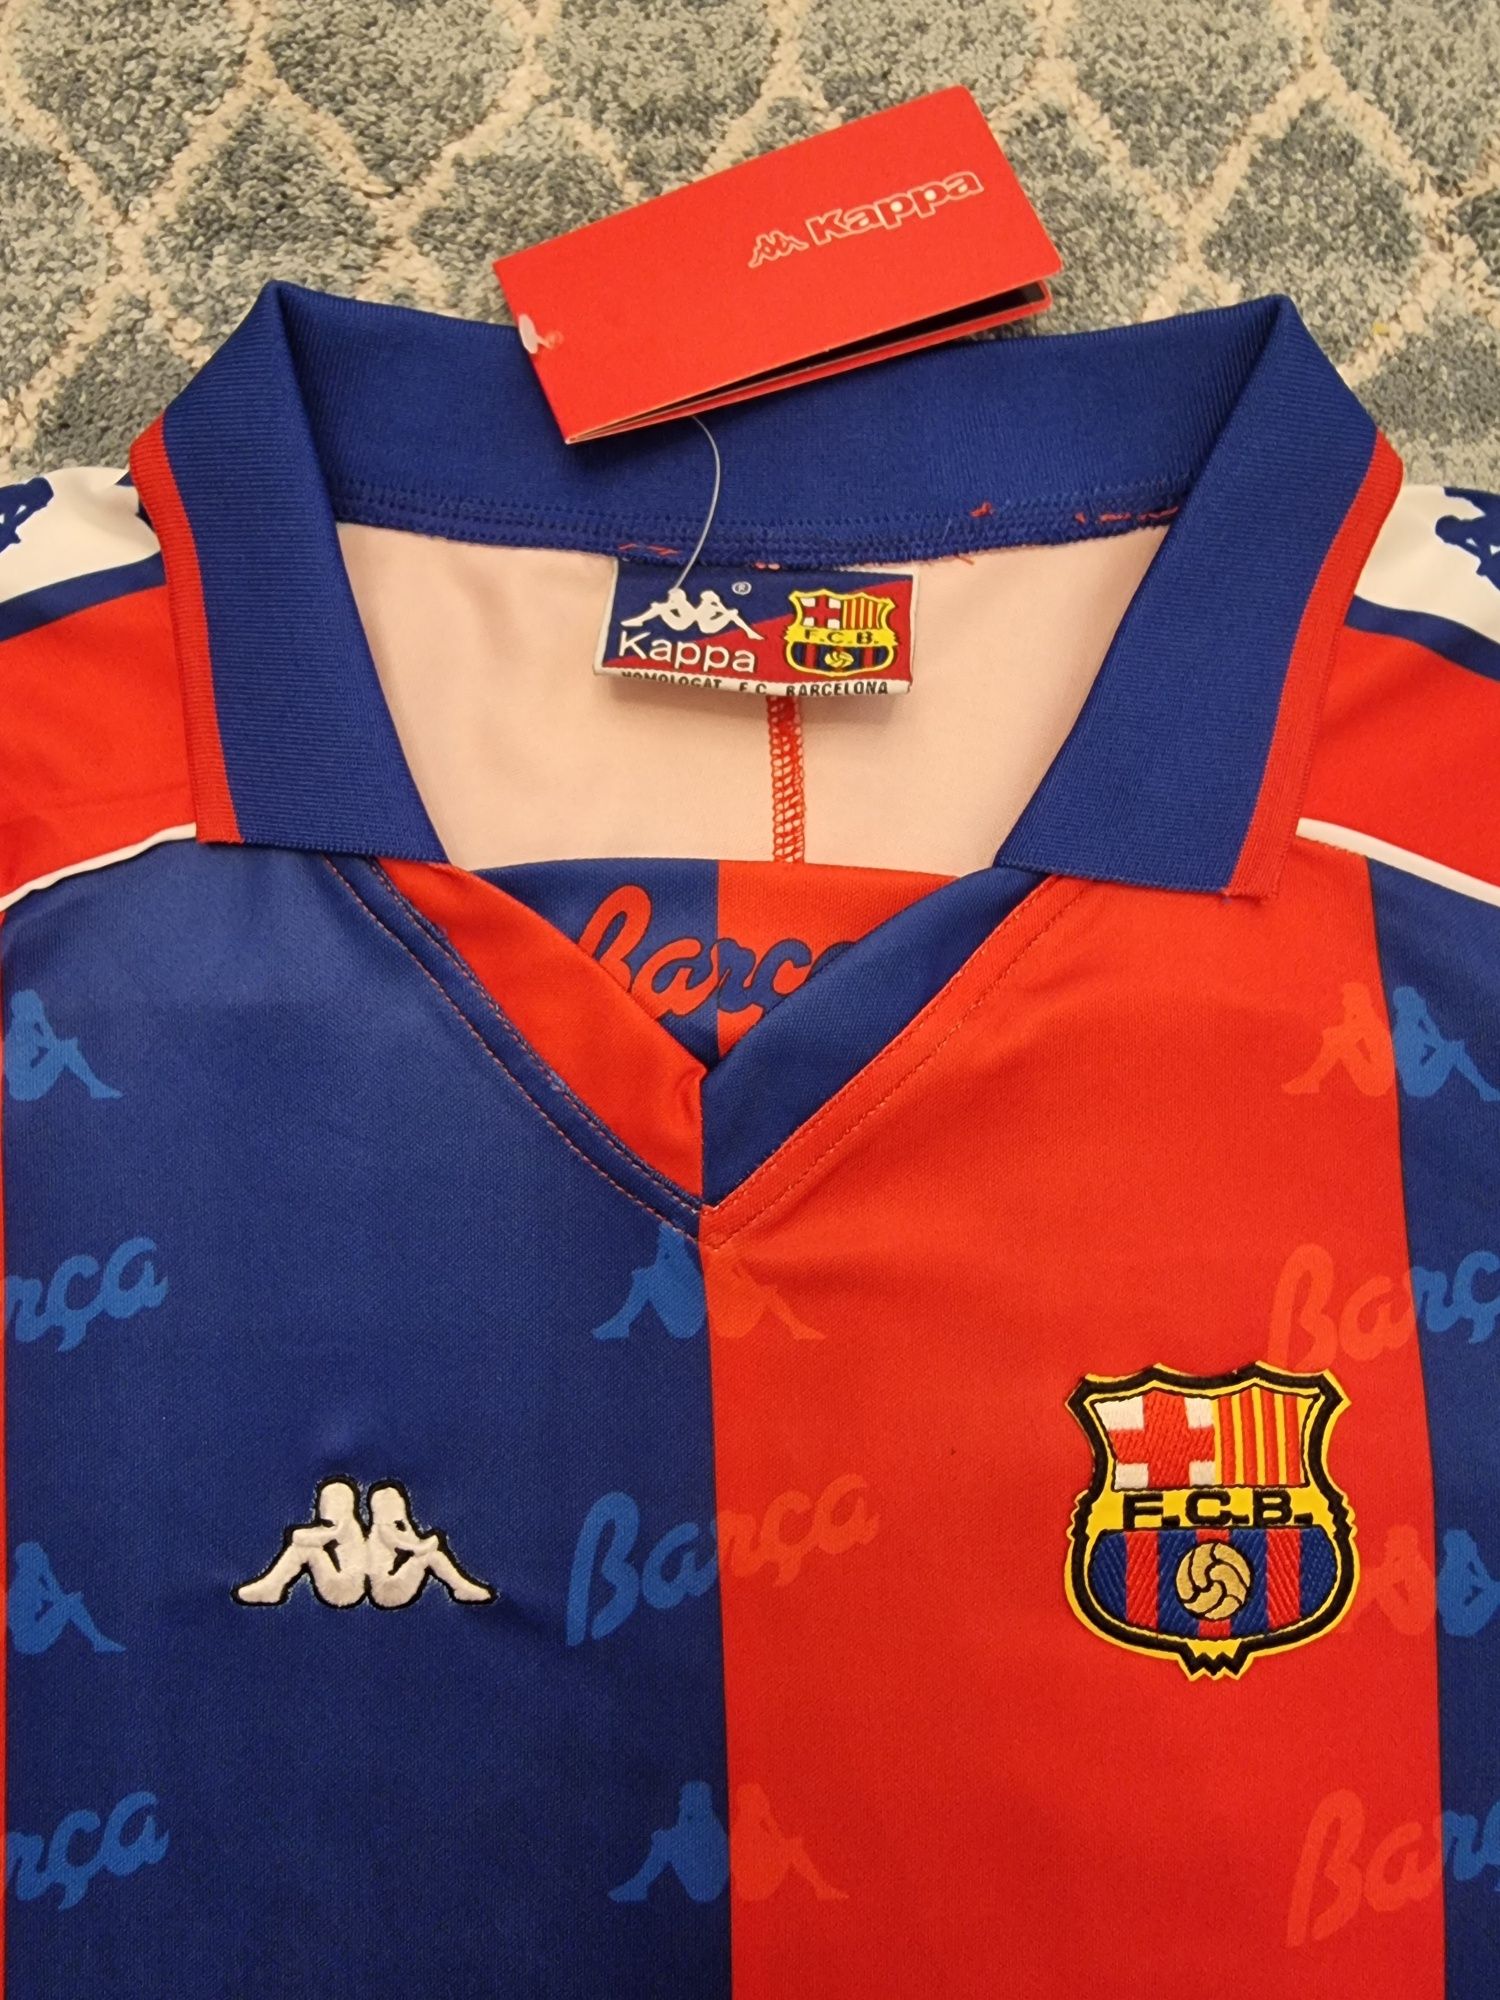 Tricou Hagi Barcelona 1994 1995